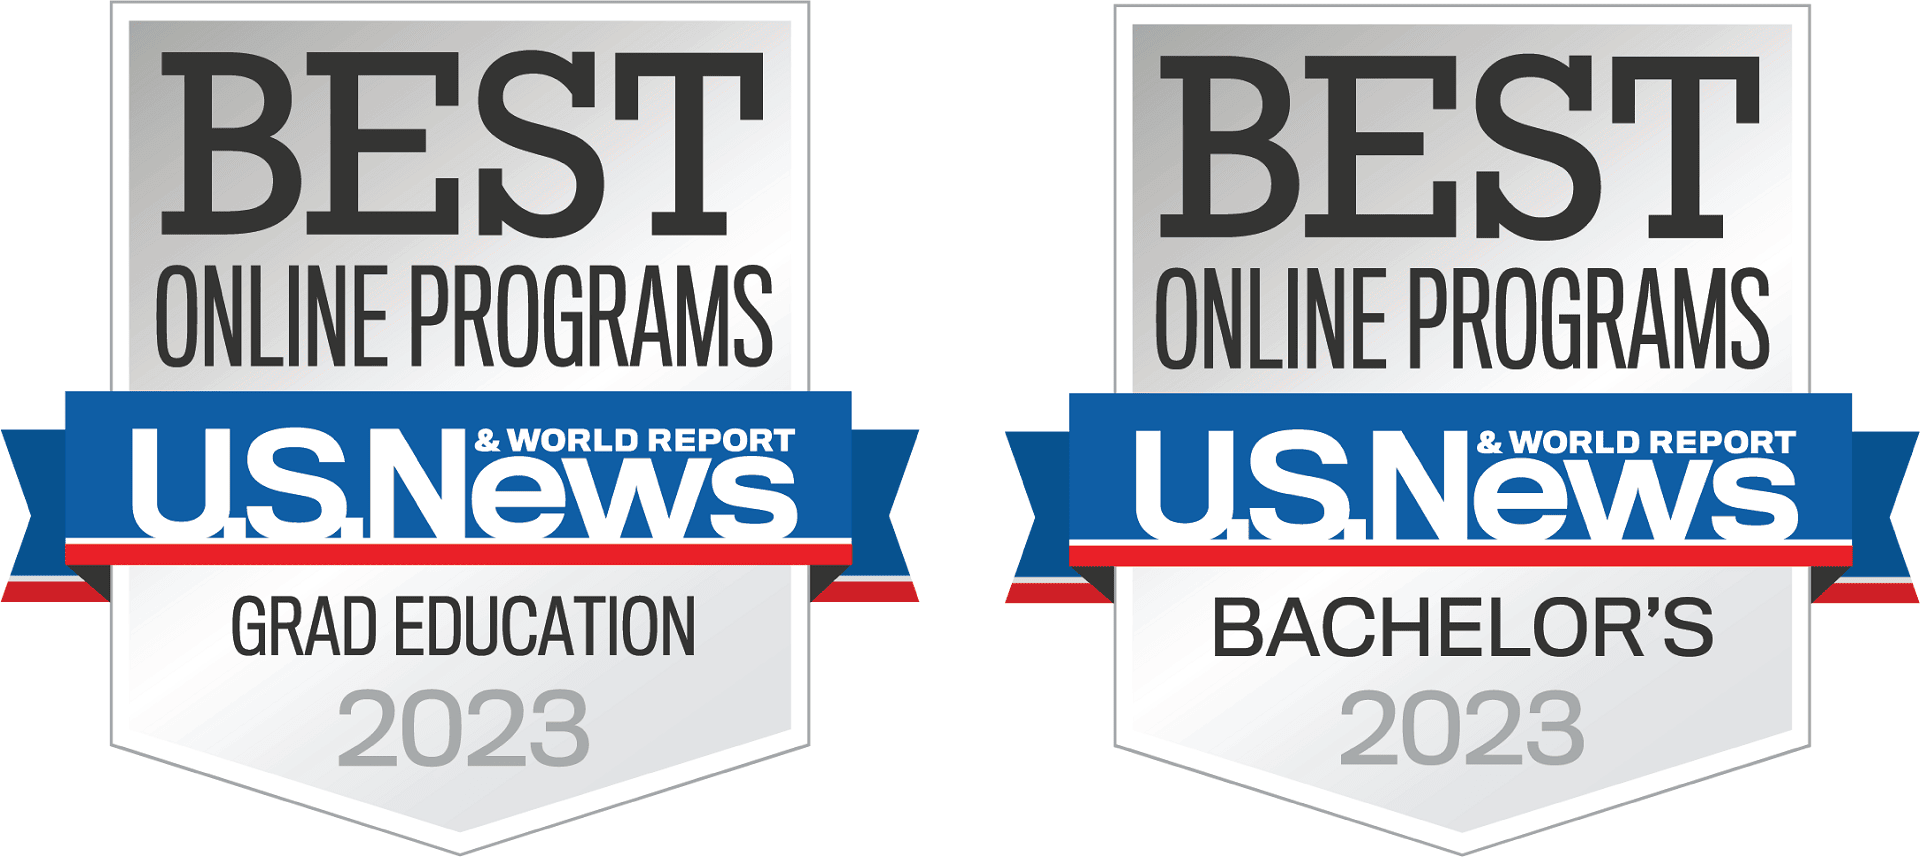 The 2023 U.S. News badges